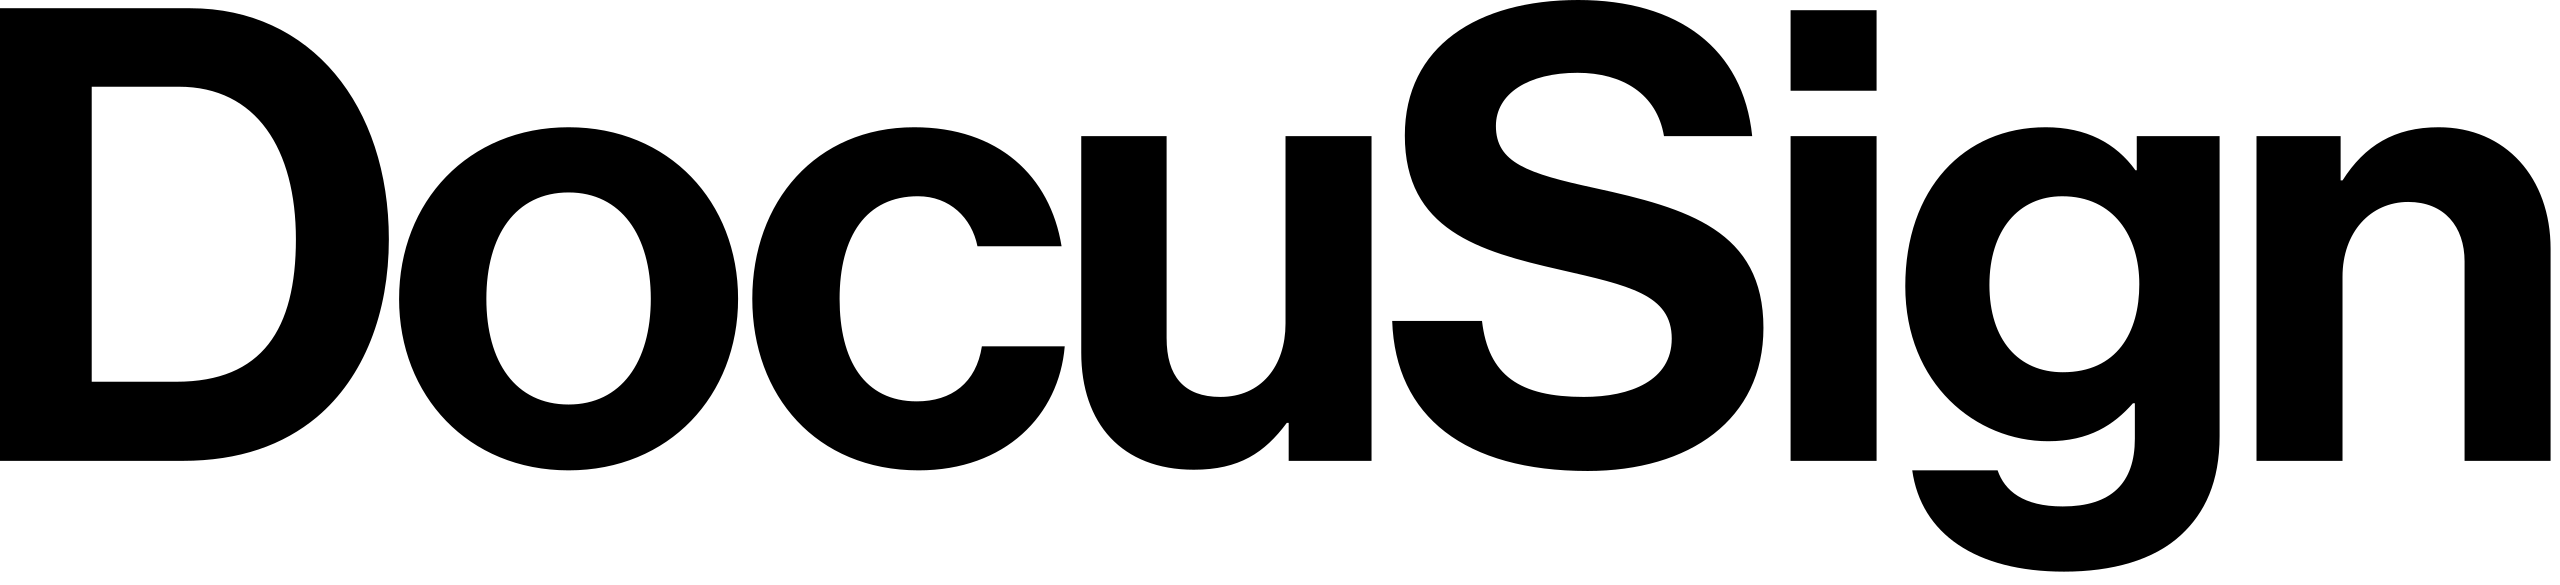 DocuSign_Logo.svg